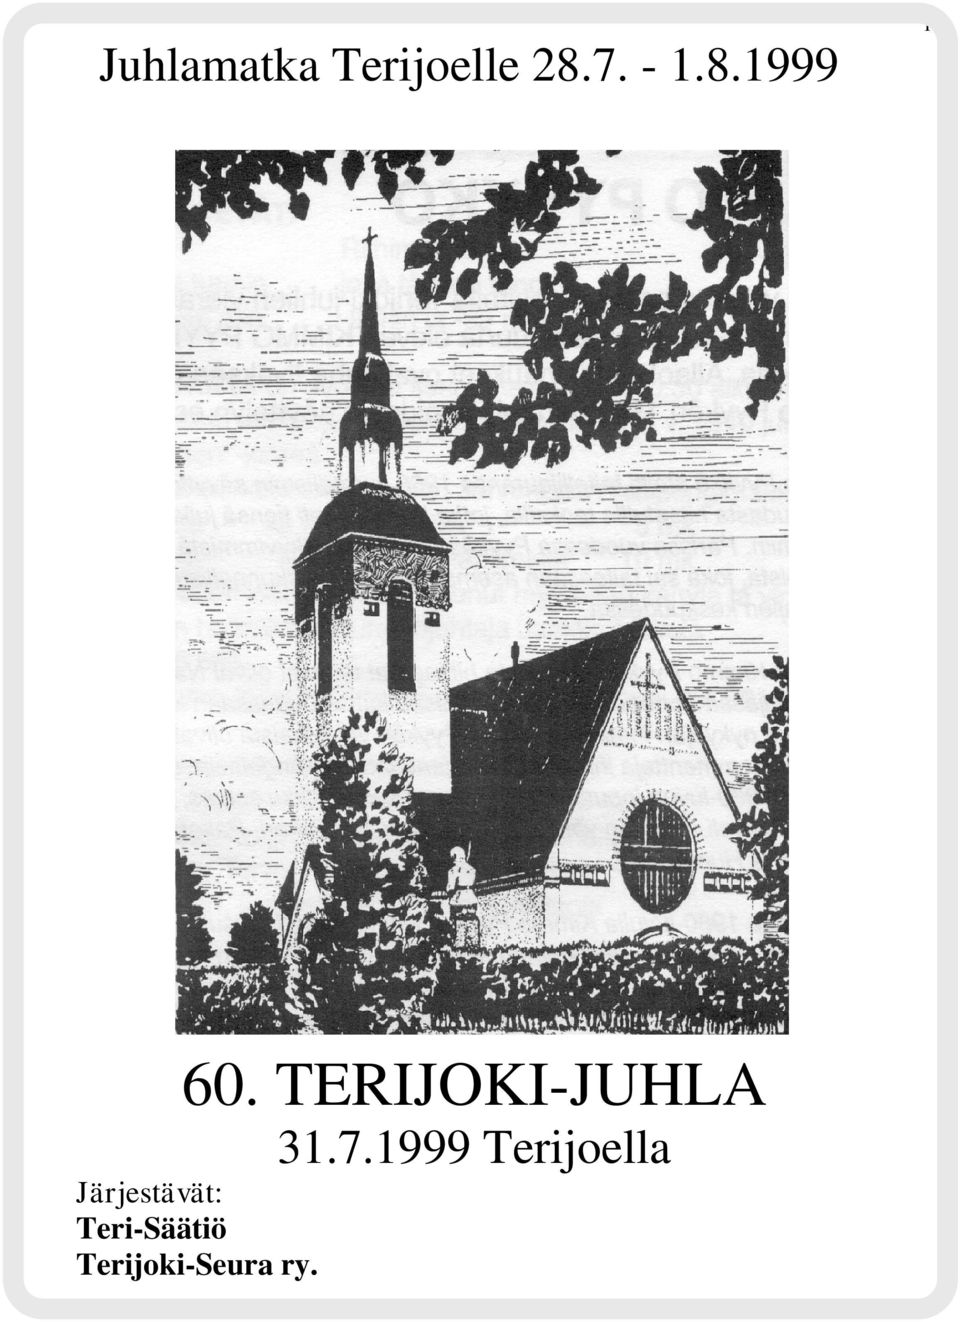 TERIJOKI-JUHLA 31.7.